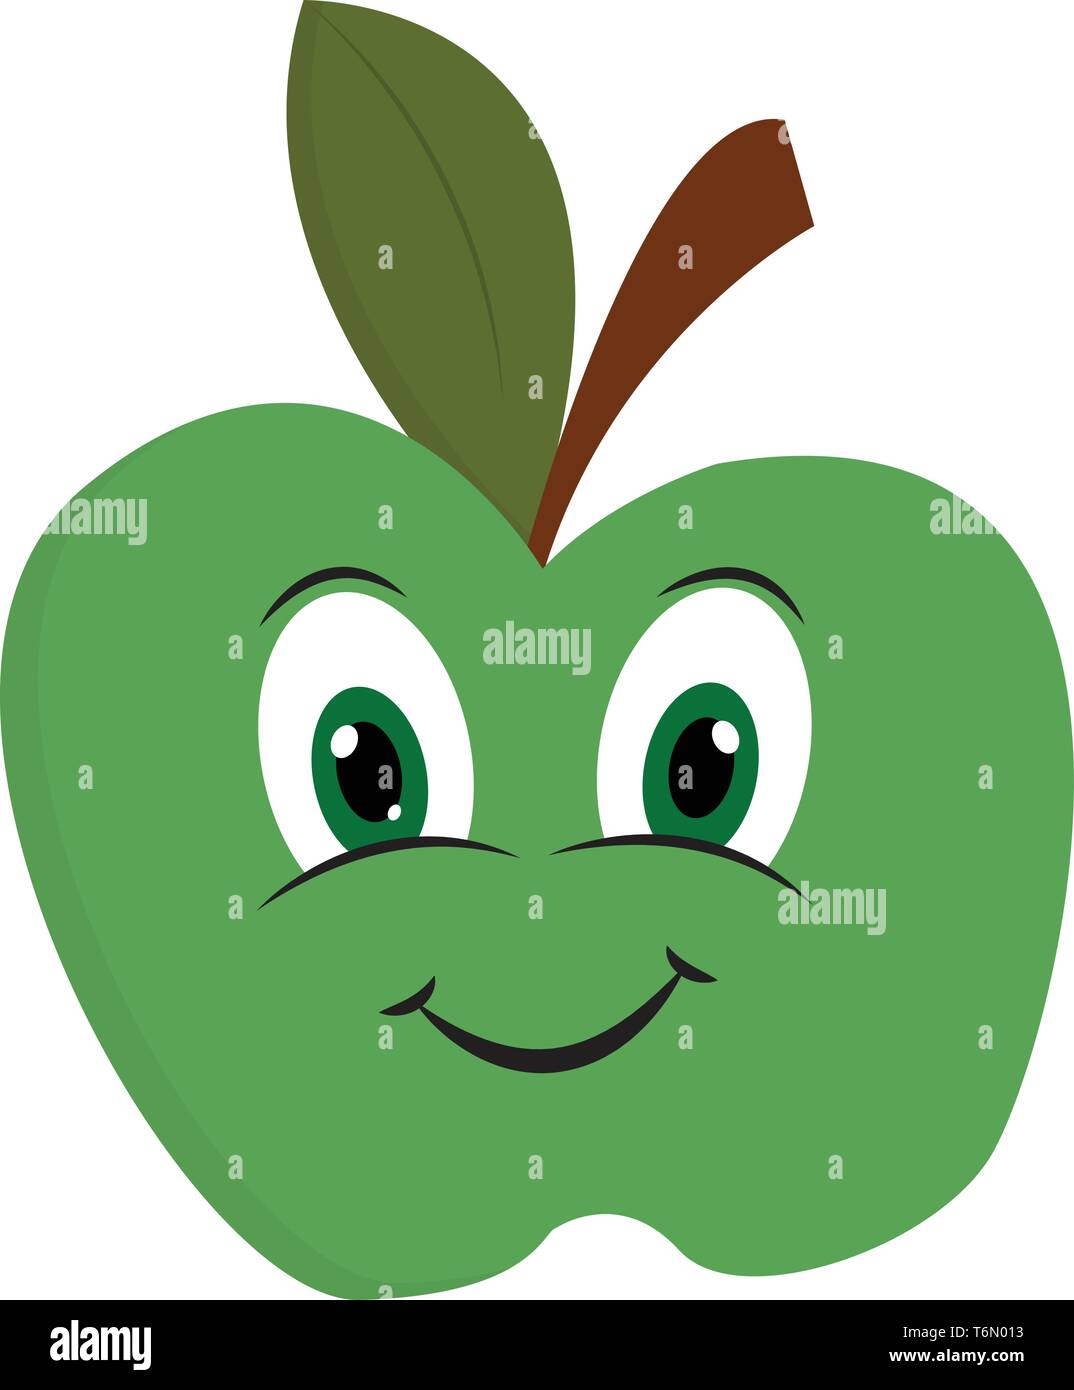 green apple vector